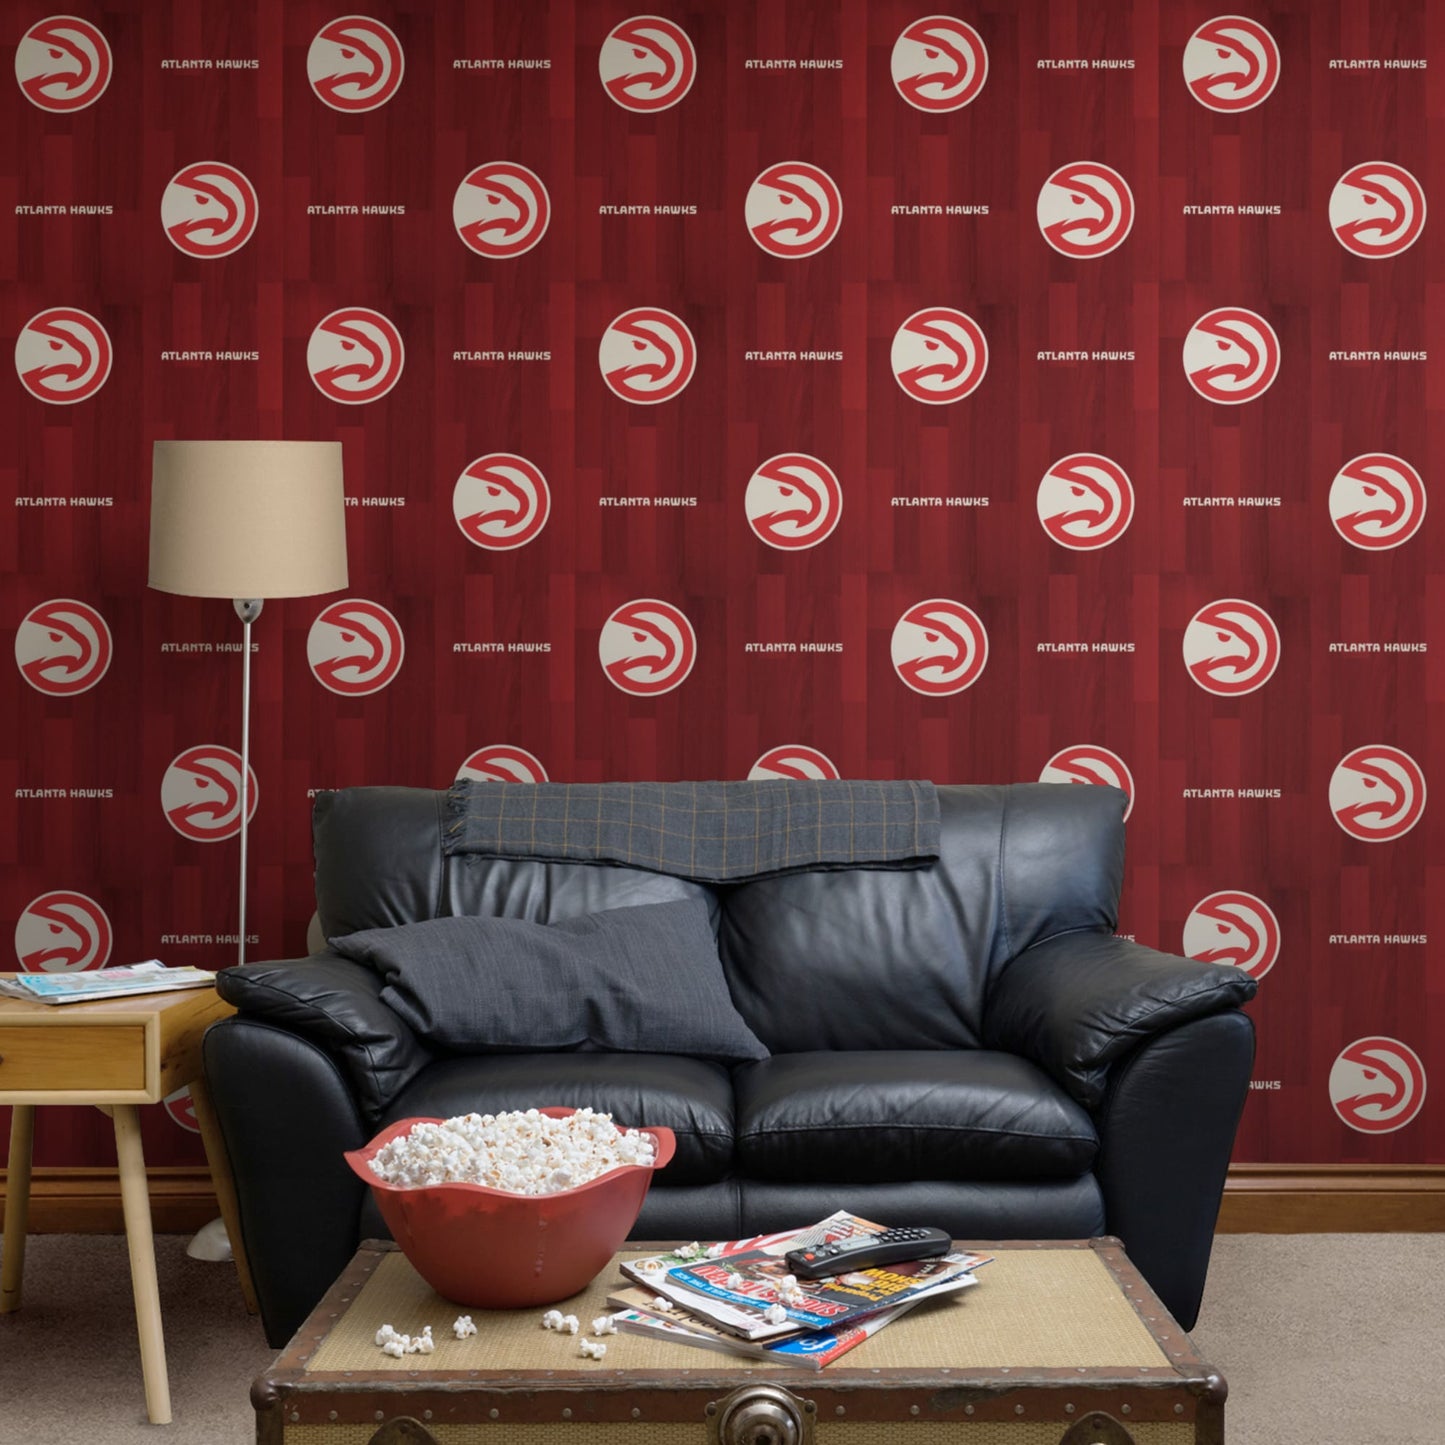 Atlanta Hawks (Red): Hardwood Pattern - Officially Licensed NBA Peel & Stick Wallpaper